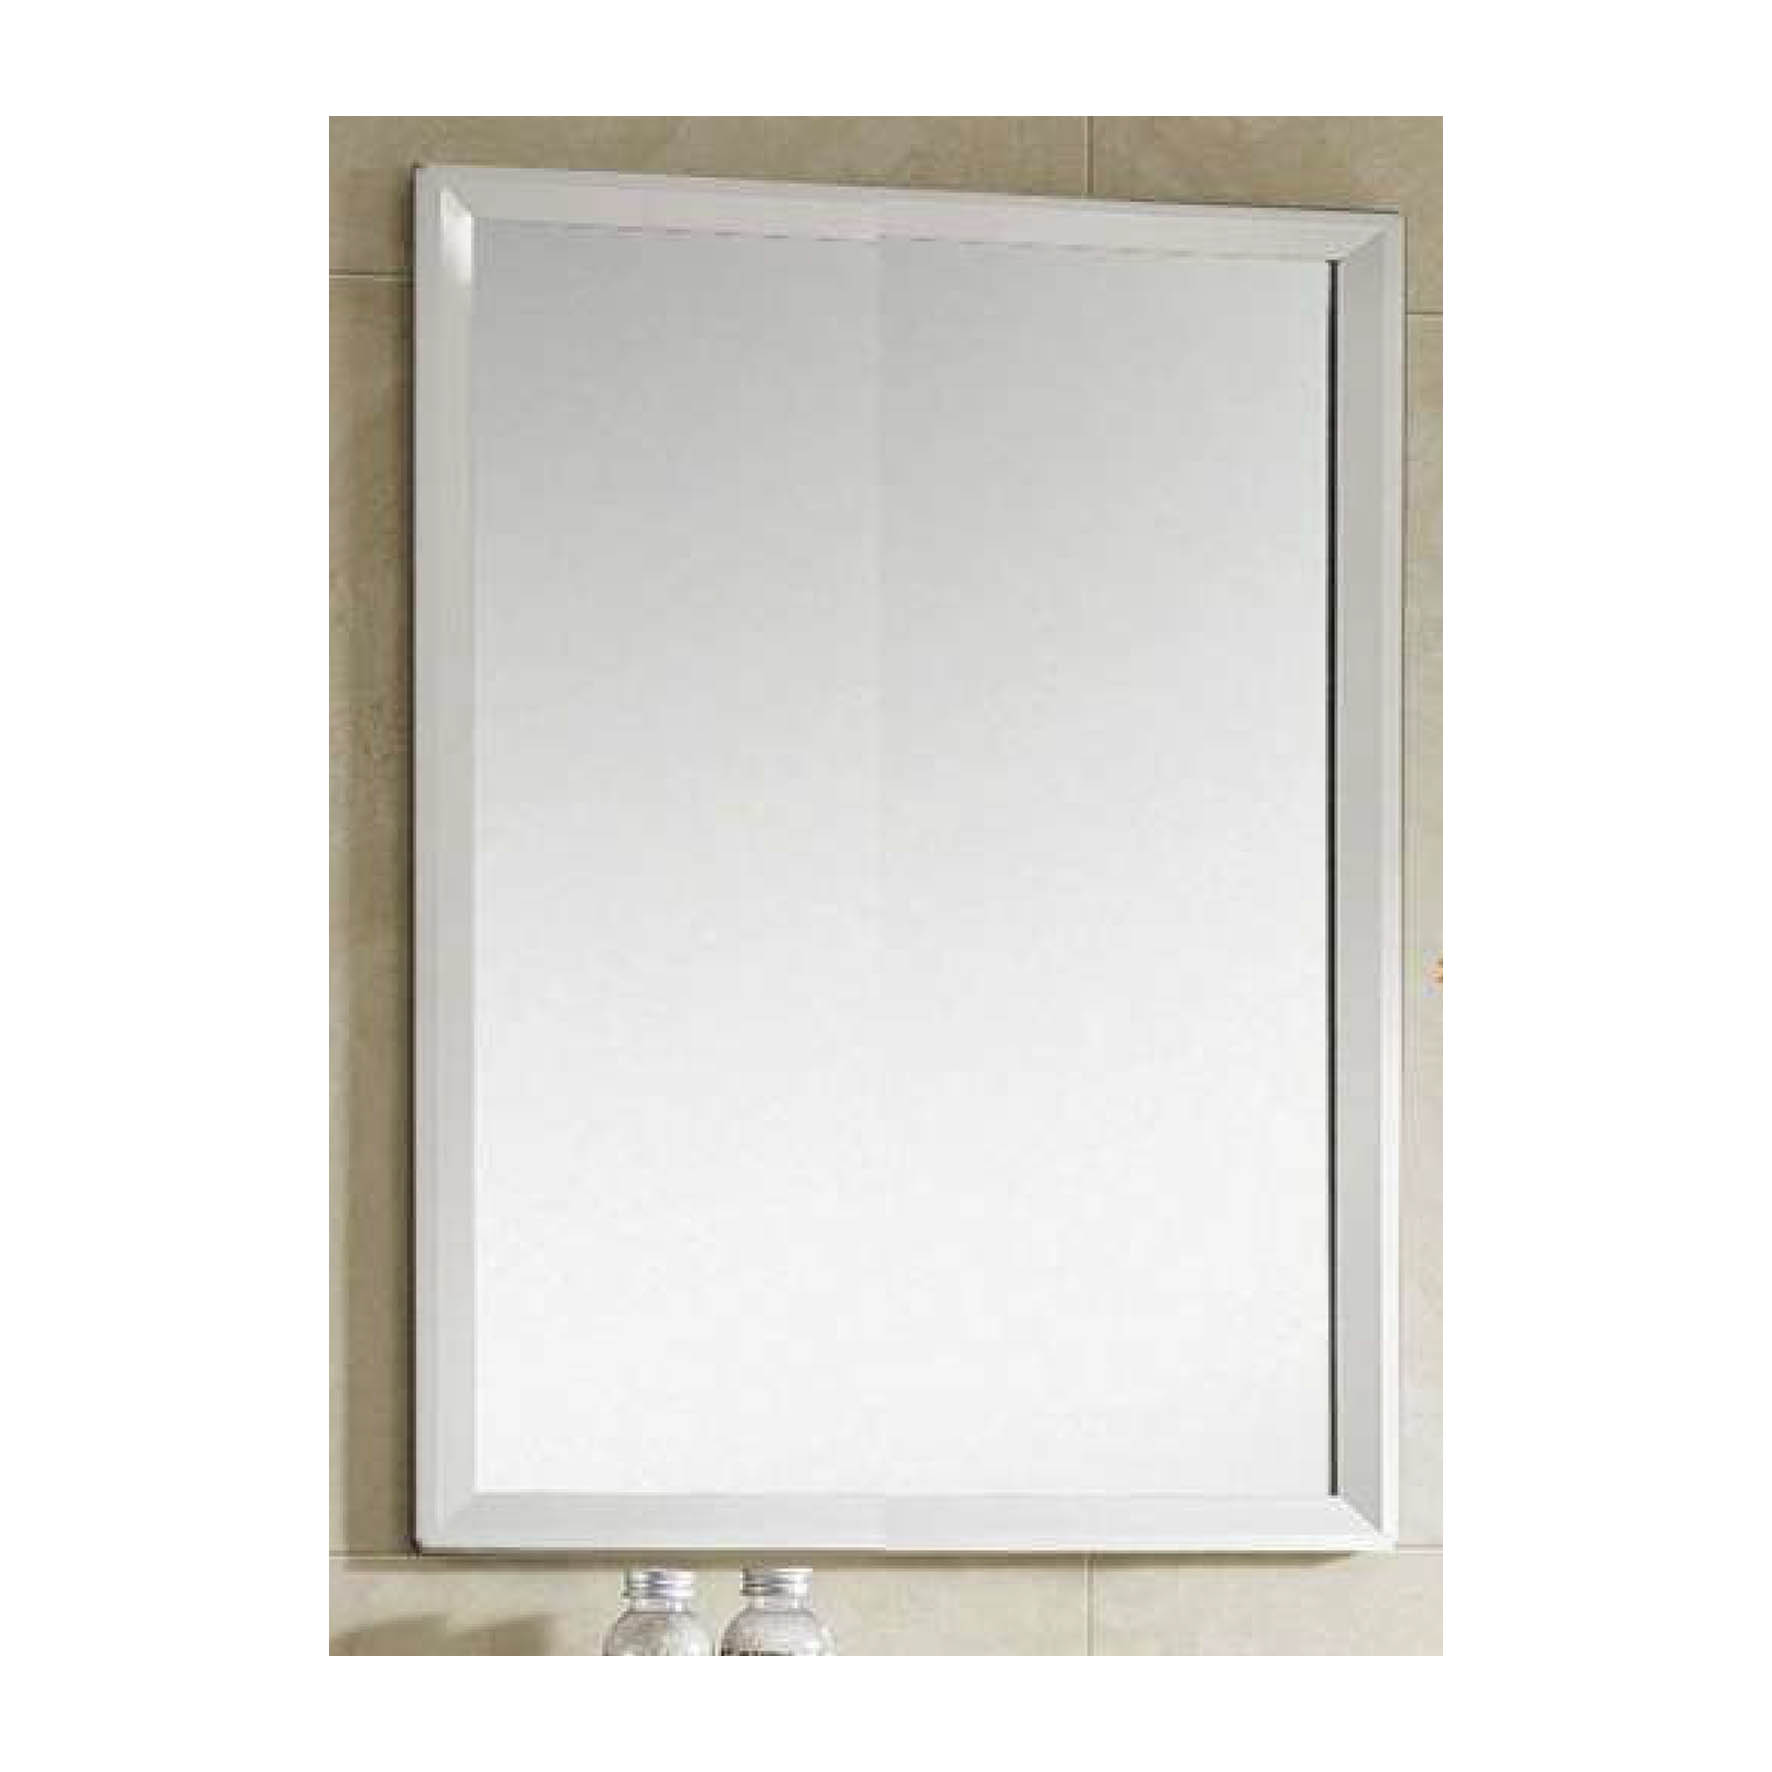 Zaffiro : Stainless Steel Framed Mirror (White) – PHT-5040W-50-M